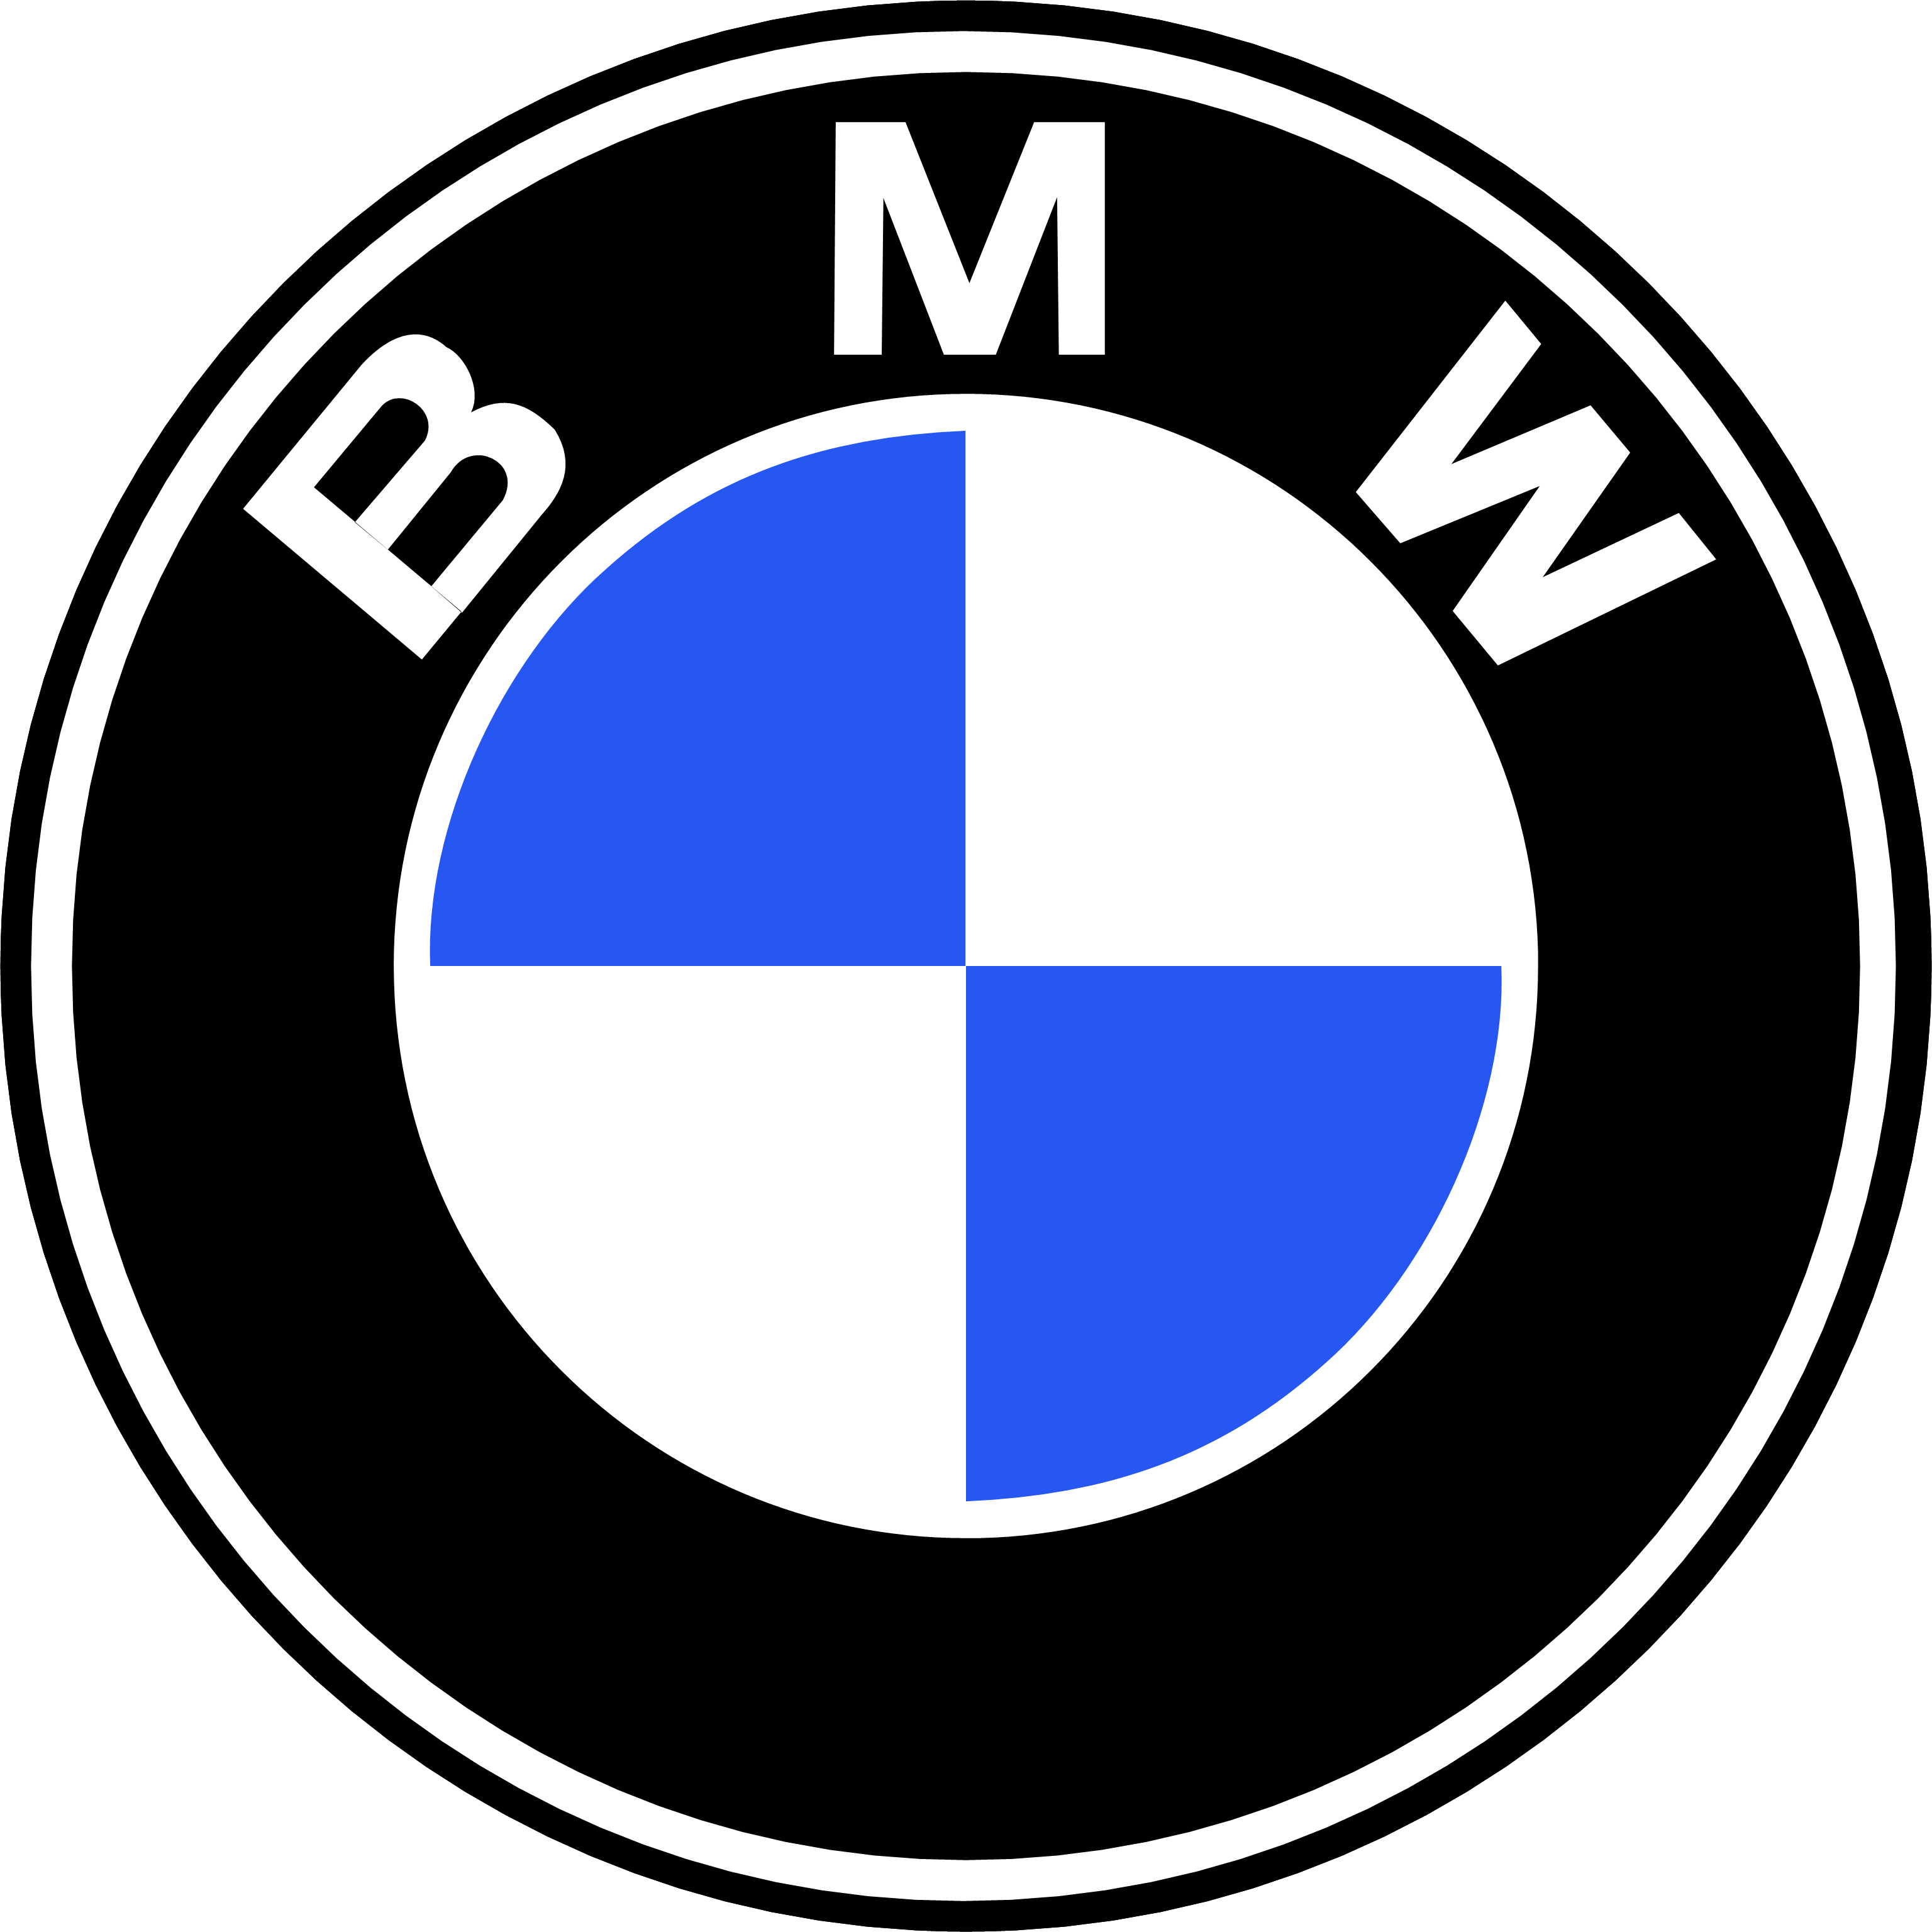 Download Bmw  Logo  File HQ PNG  Image FreePNGImg